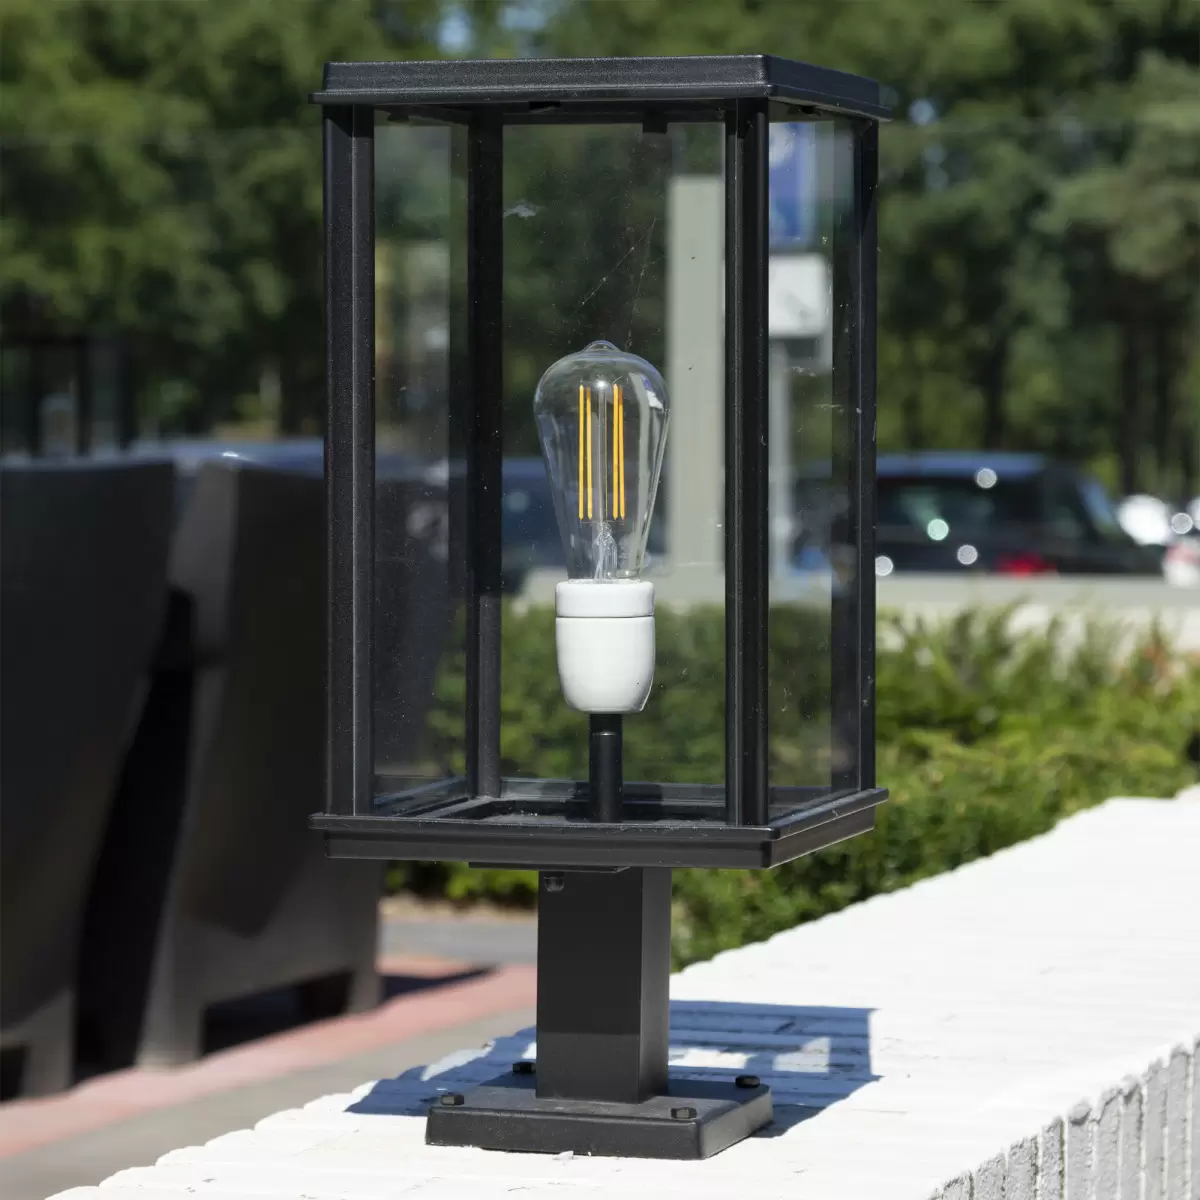 Gelach Golf intelligentie Vierkante buitenlamp Capital Sokkel XL | Officiële site KS Verlichting